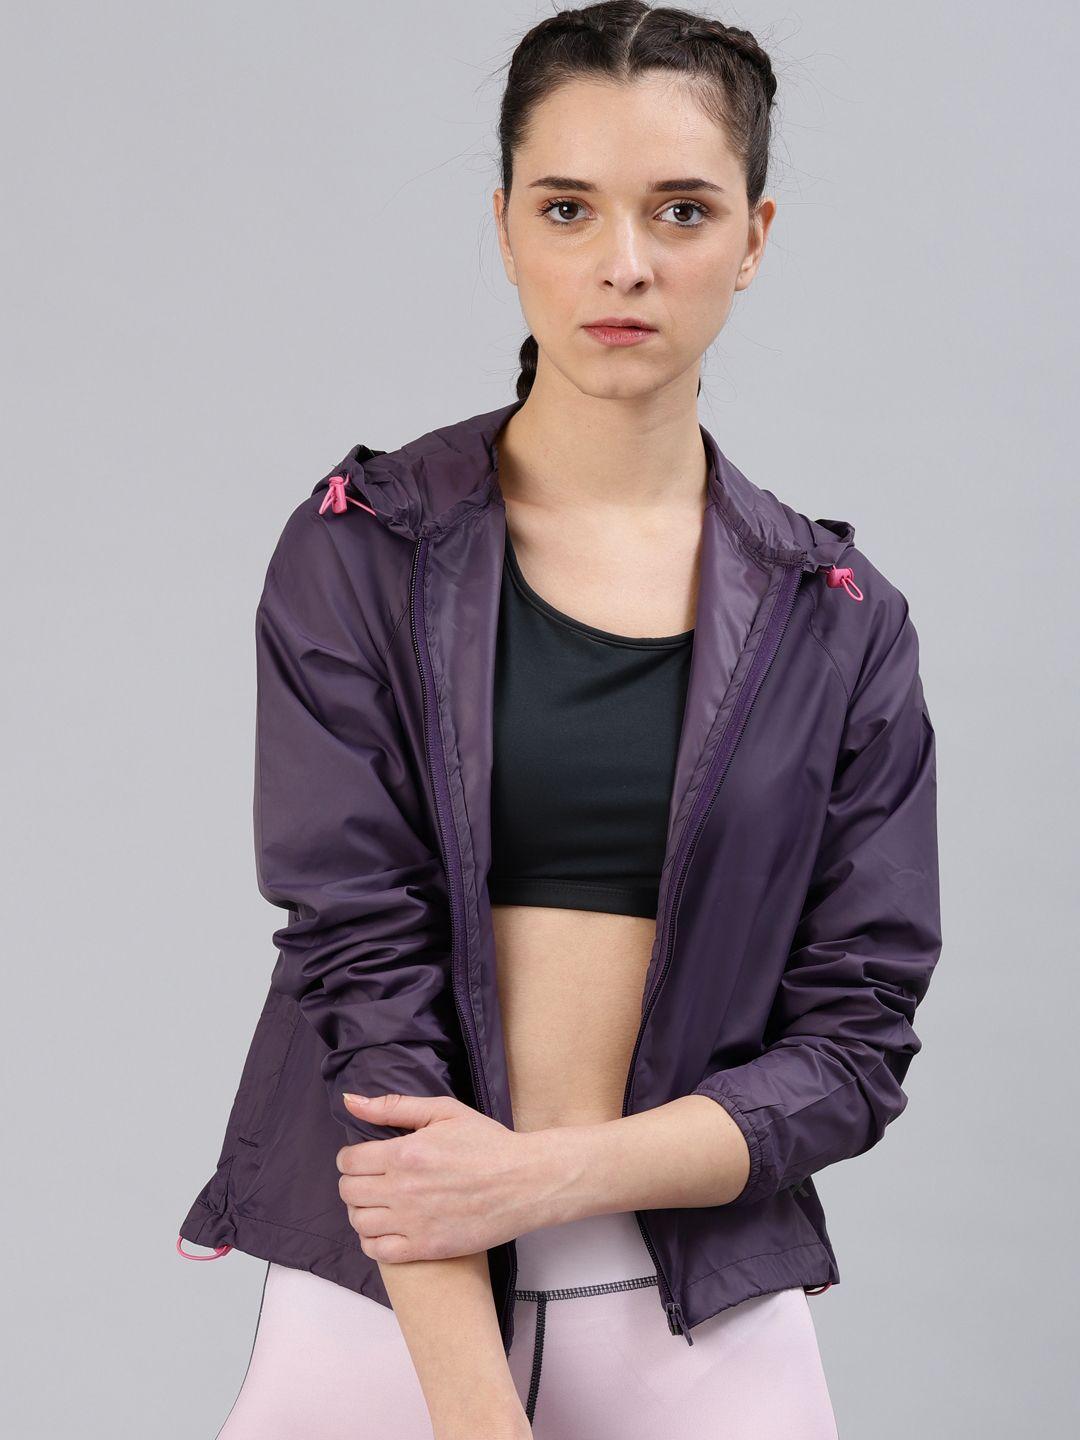 hrx by hrithik roshan women purple running jacket